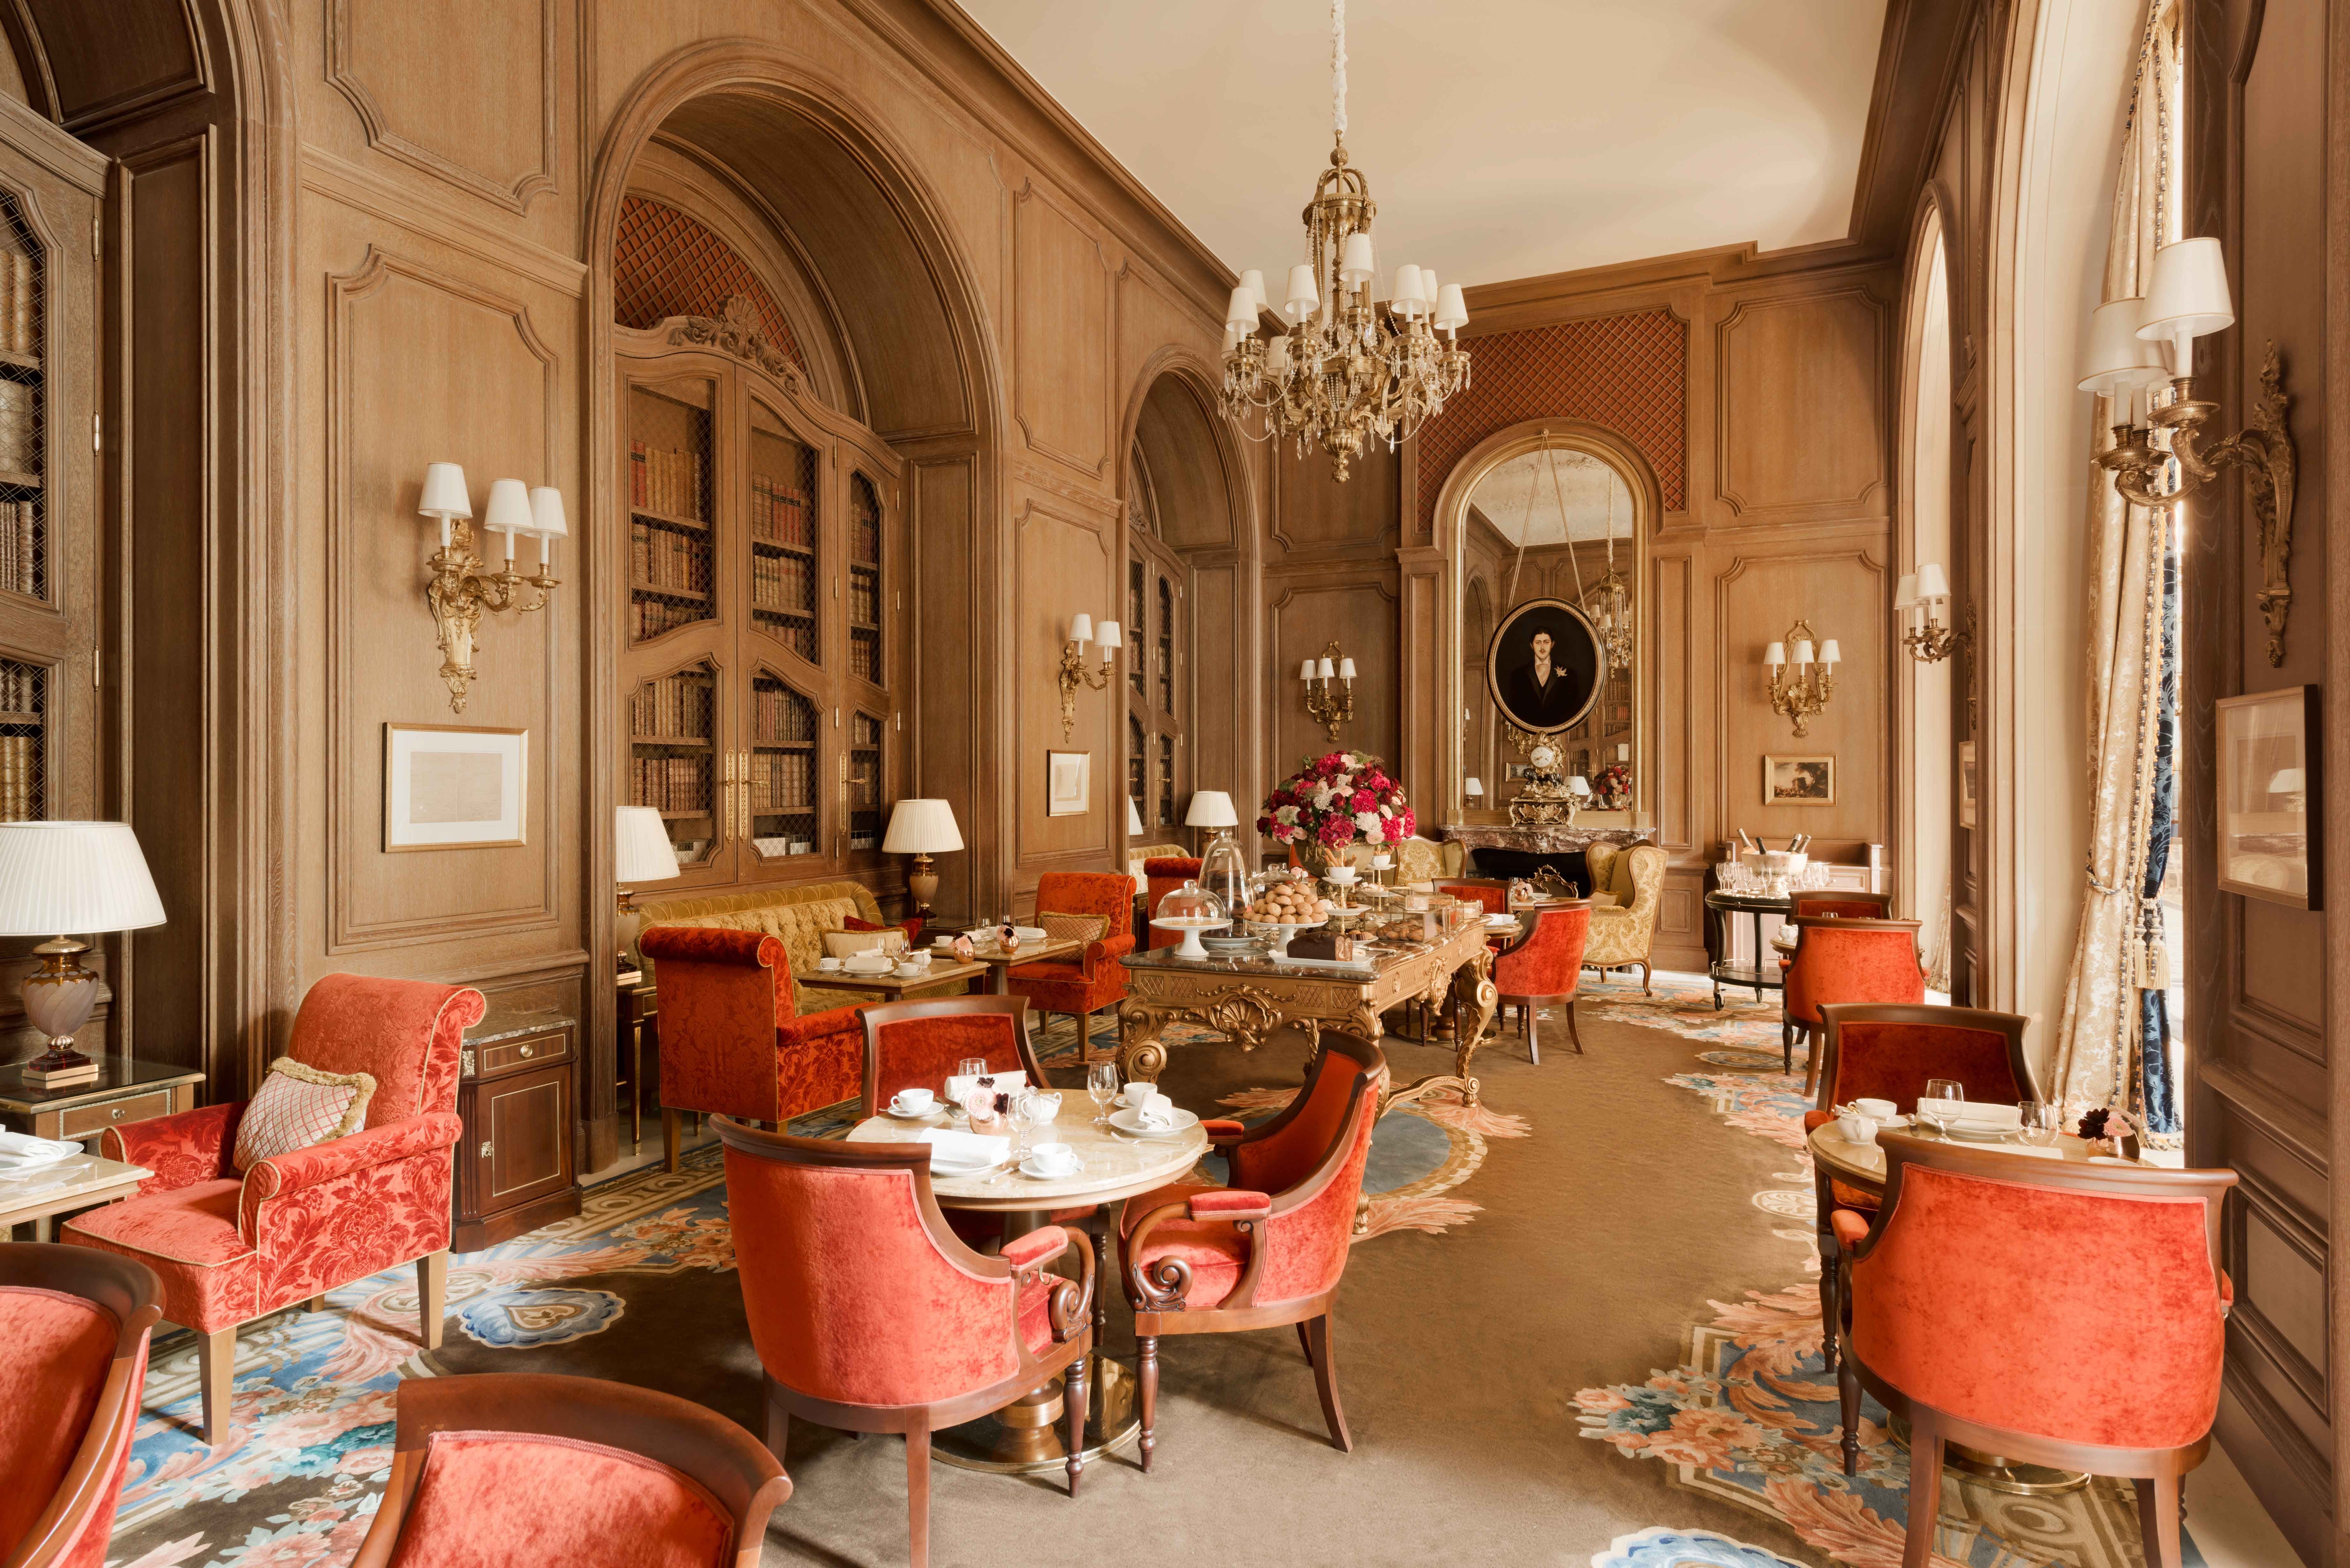 Hôtel Ritz Paris - Simple English Wikipedia, the free encyclopedia